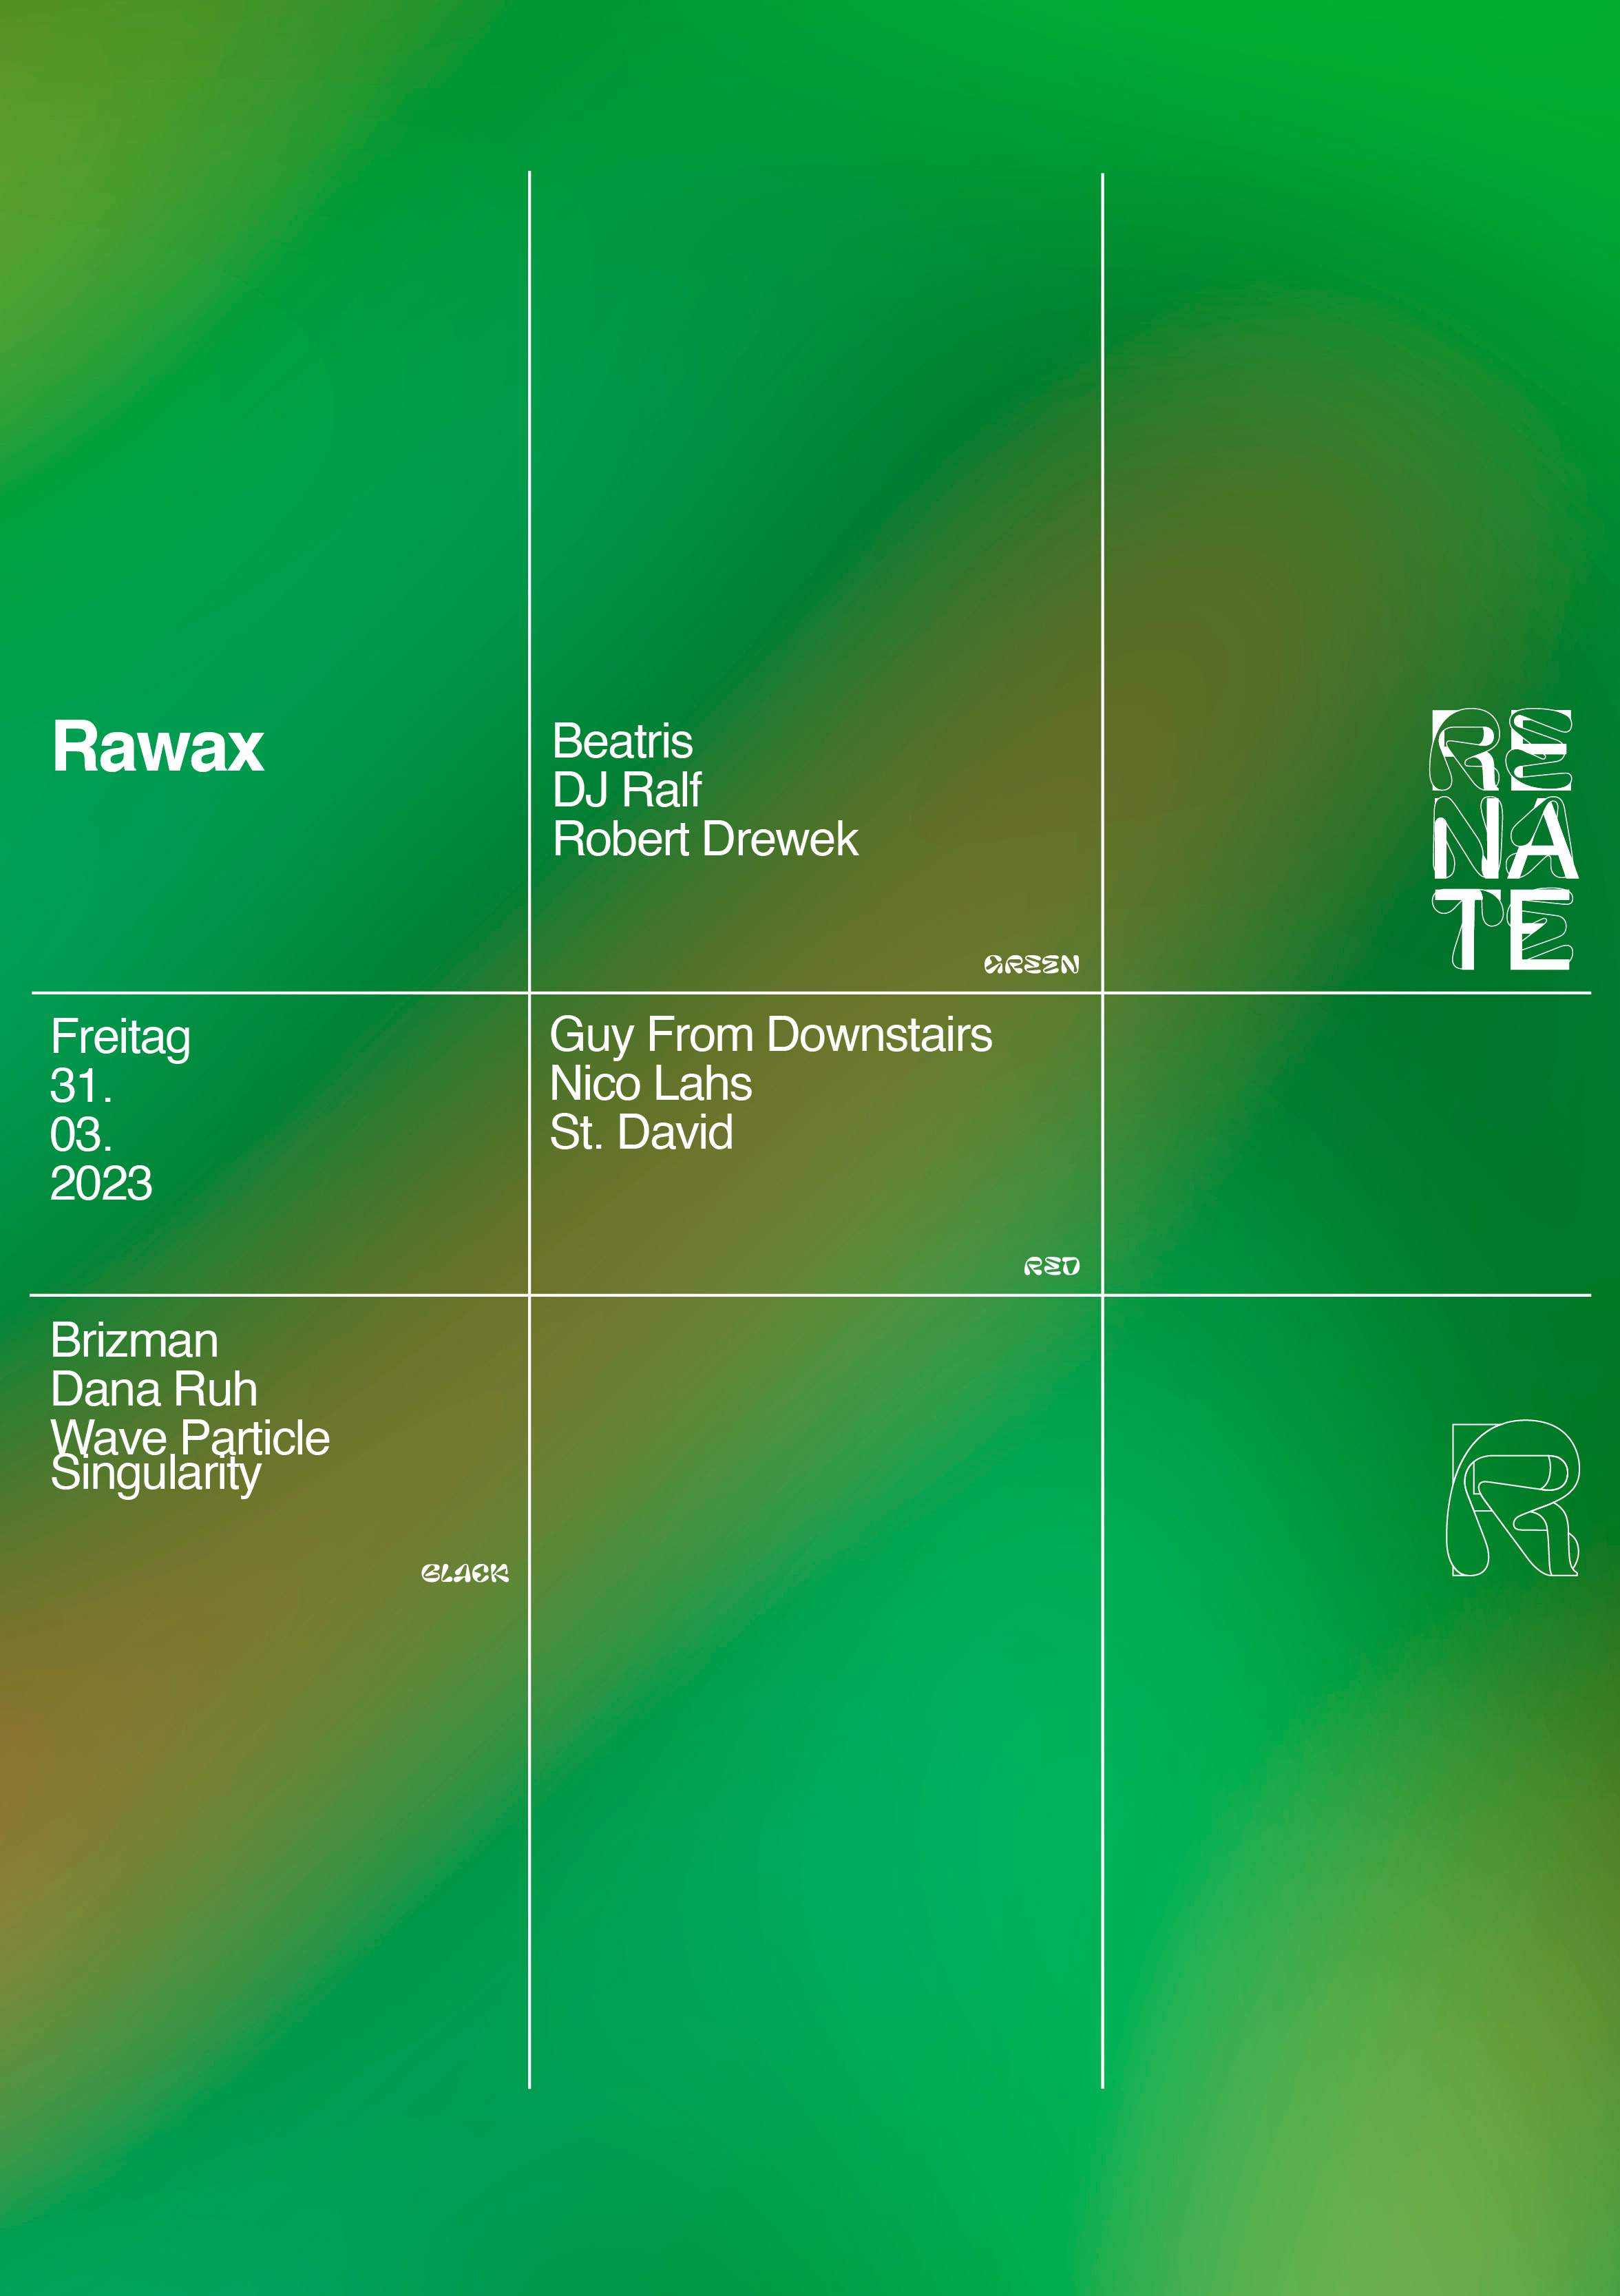 Rawax x Renate with DJ Ralf, Dana Ruh, Nico Lahs, Beatris - フライヤー表